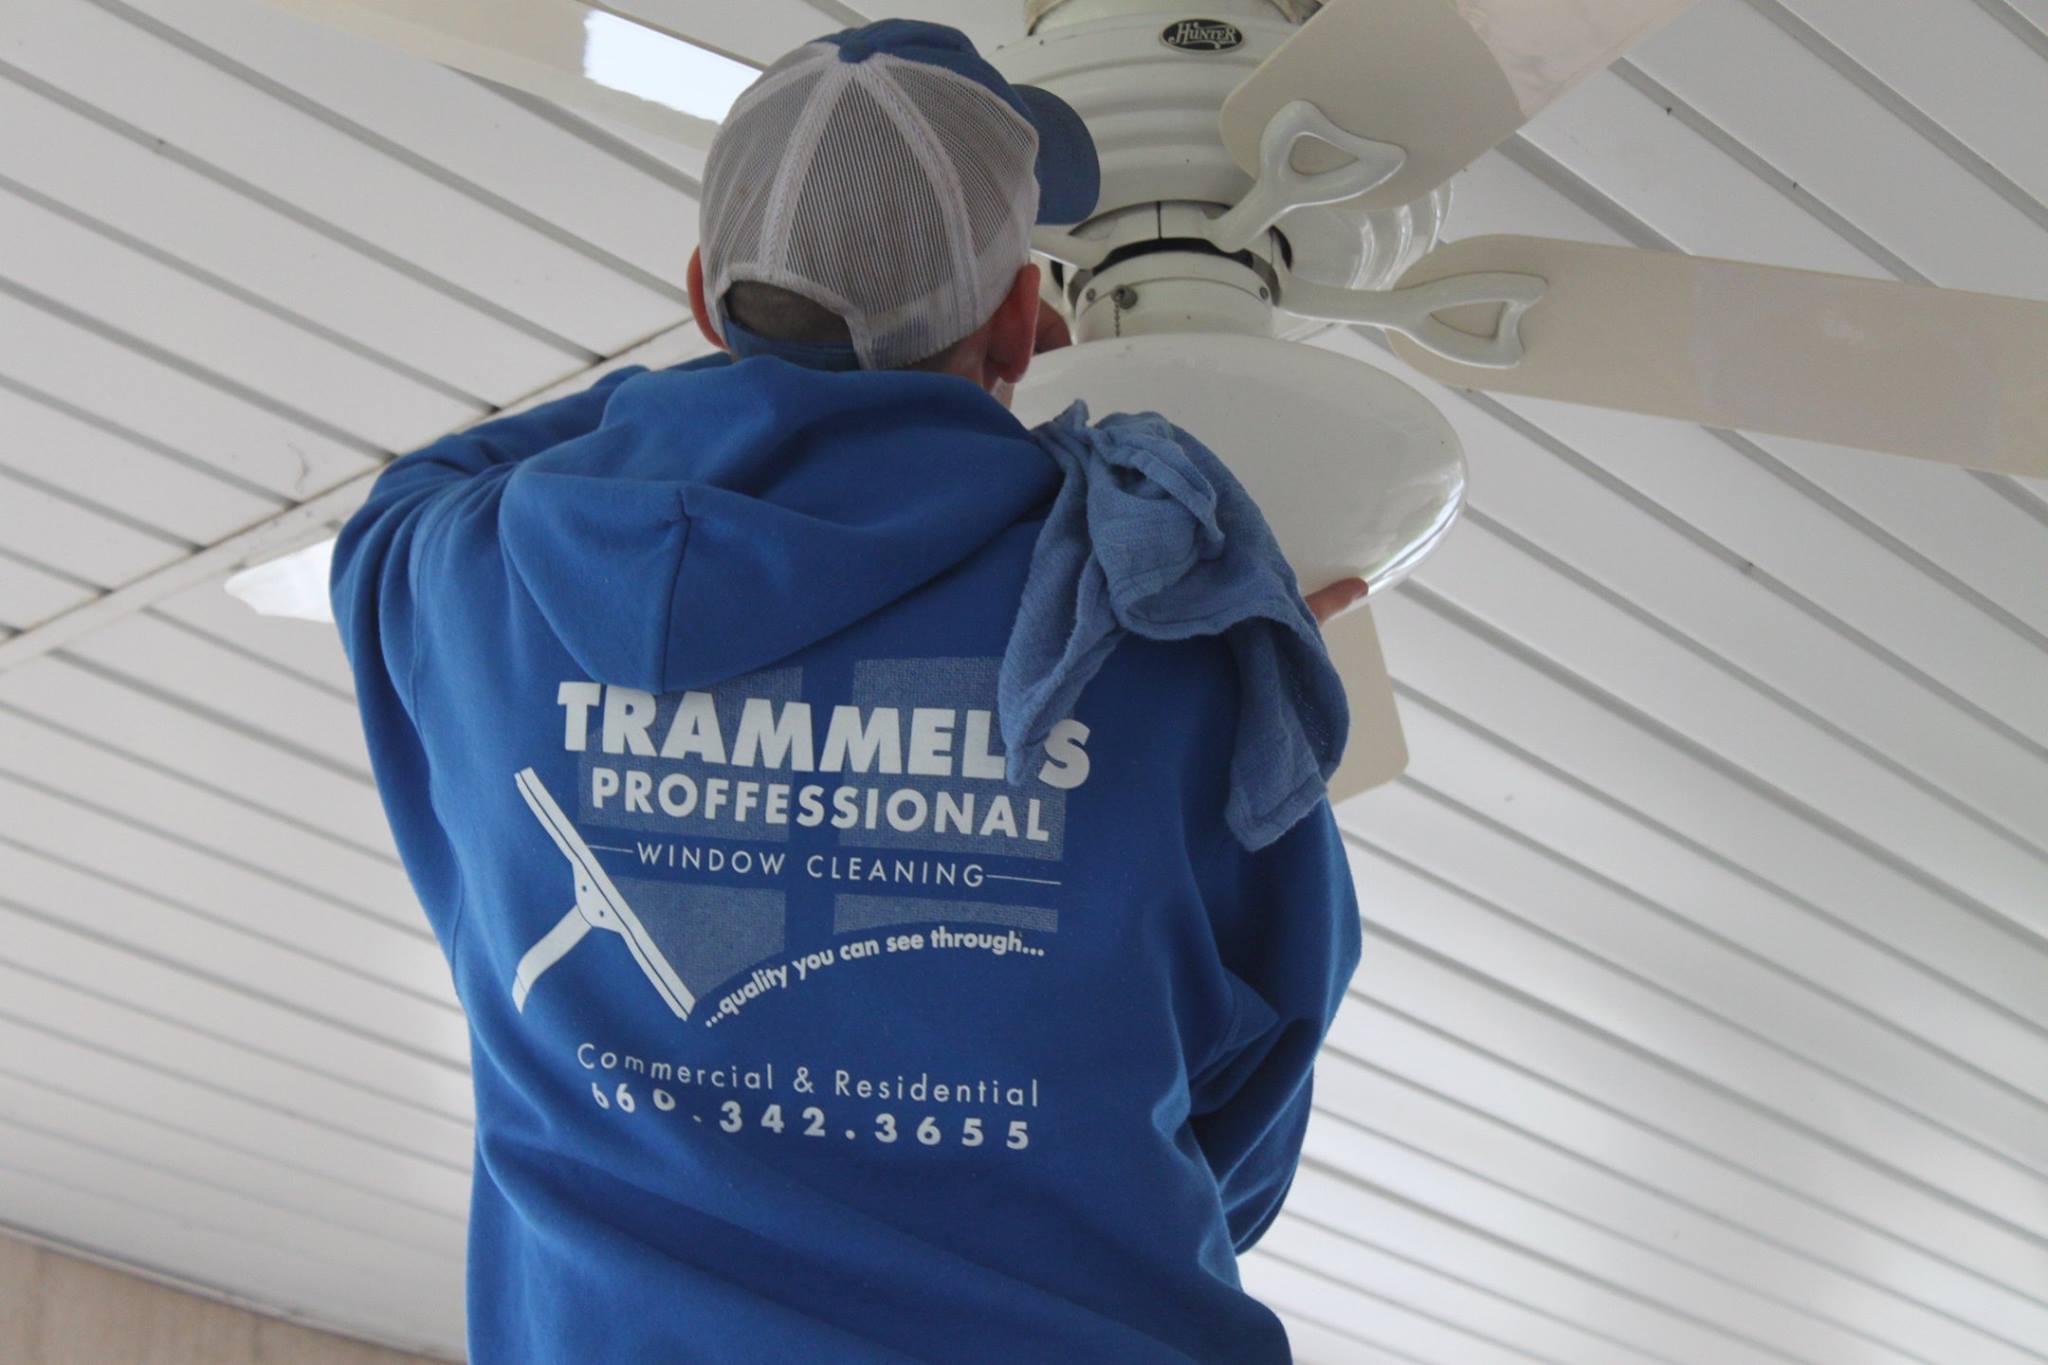 Trammel's Professional Window Cleaning